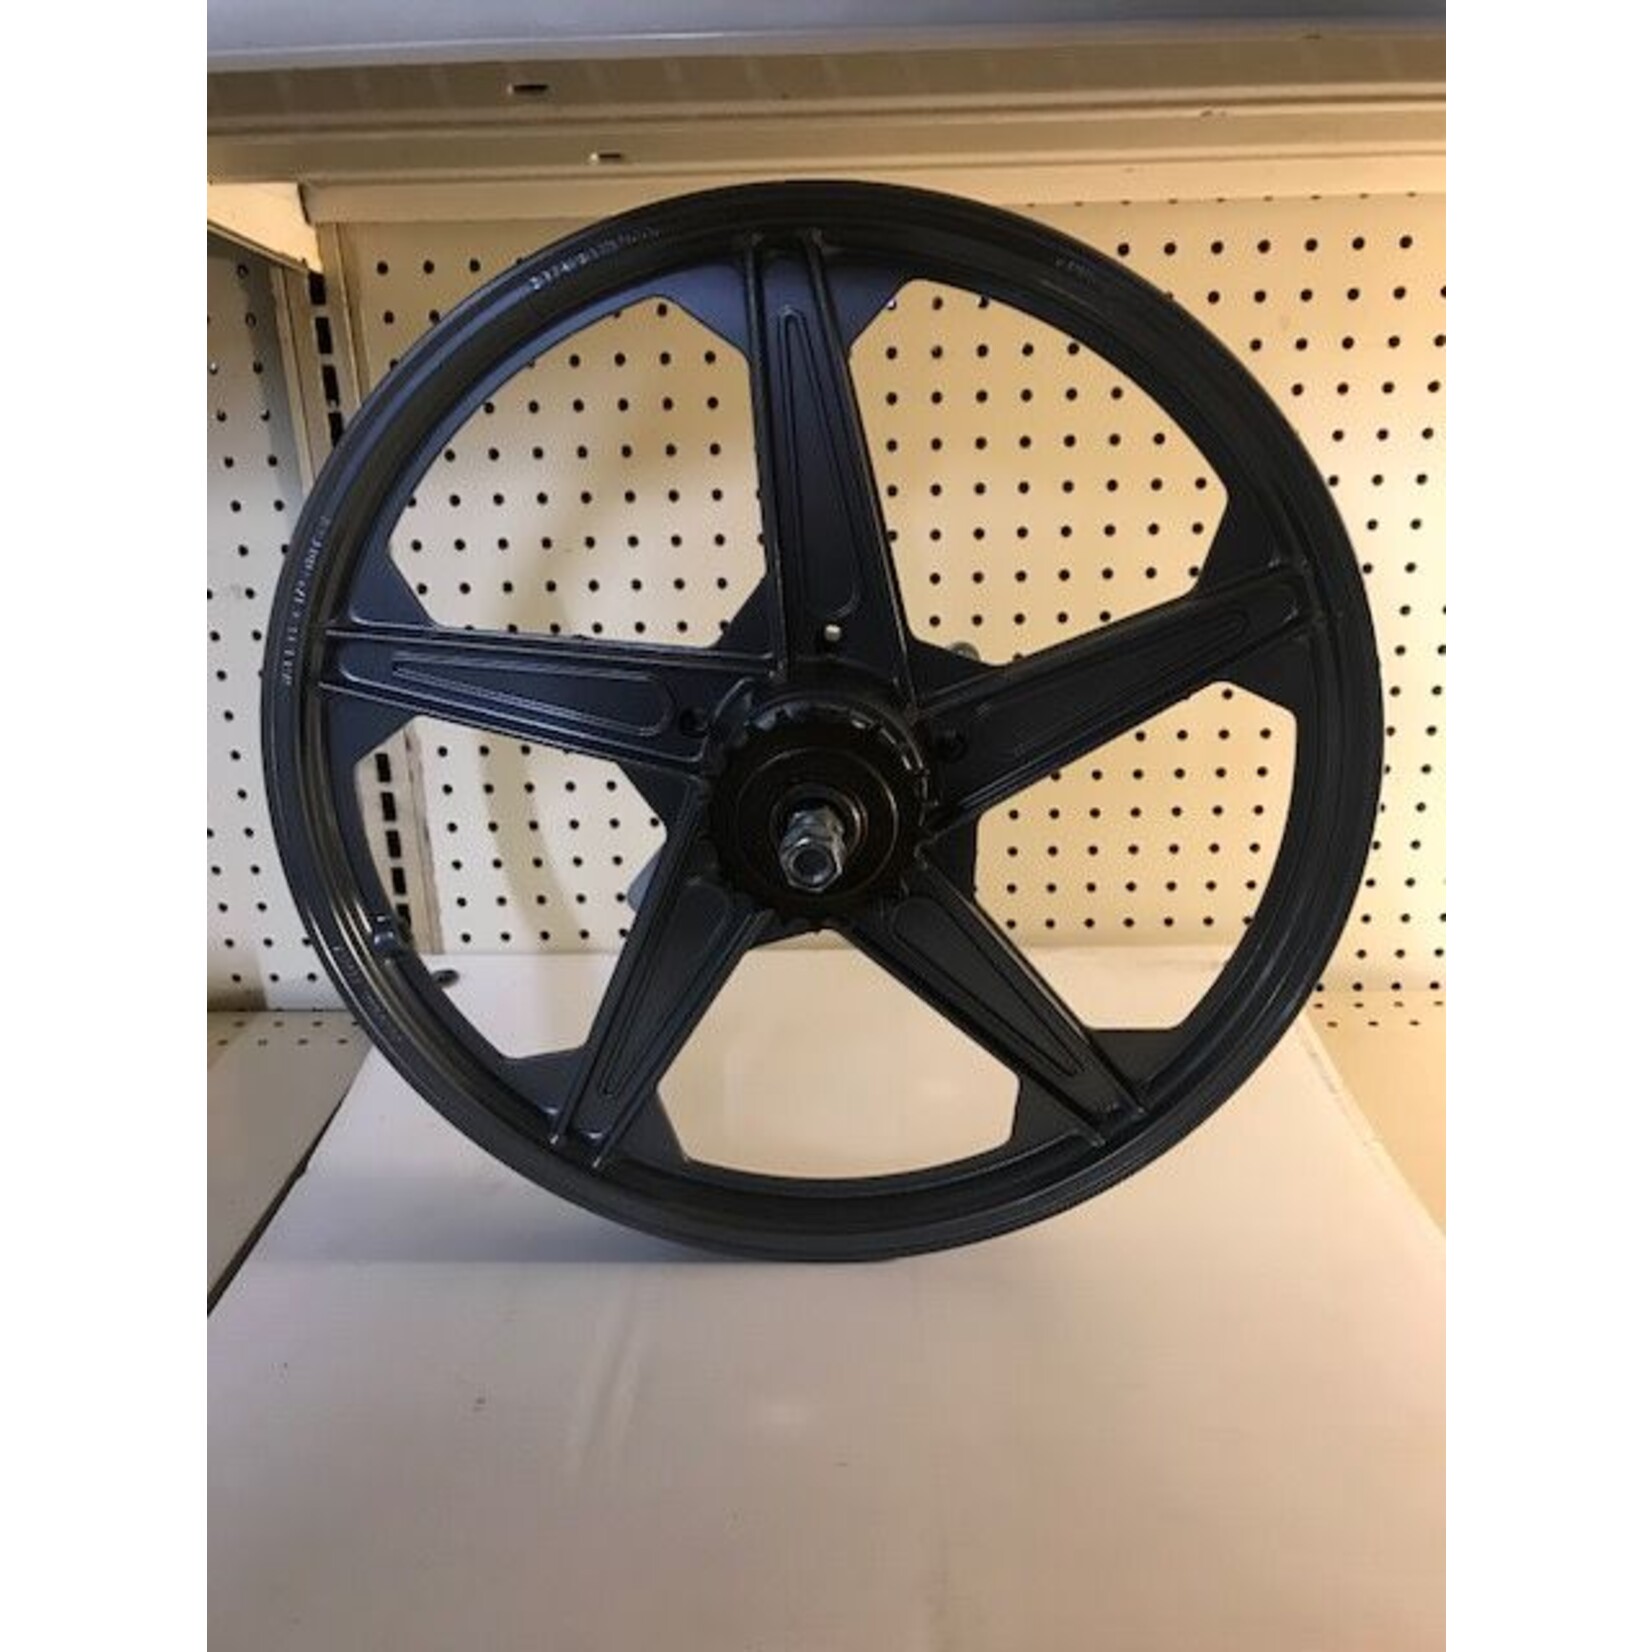 NewTecnoArt Rear Wheel Naked, Passenger Side